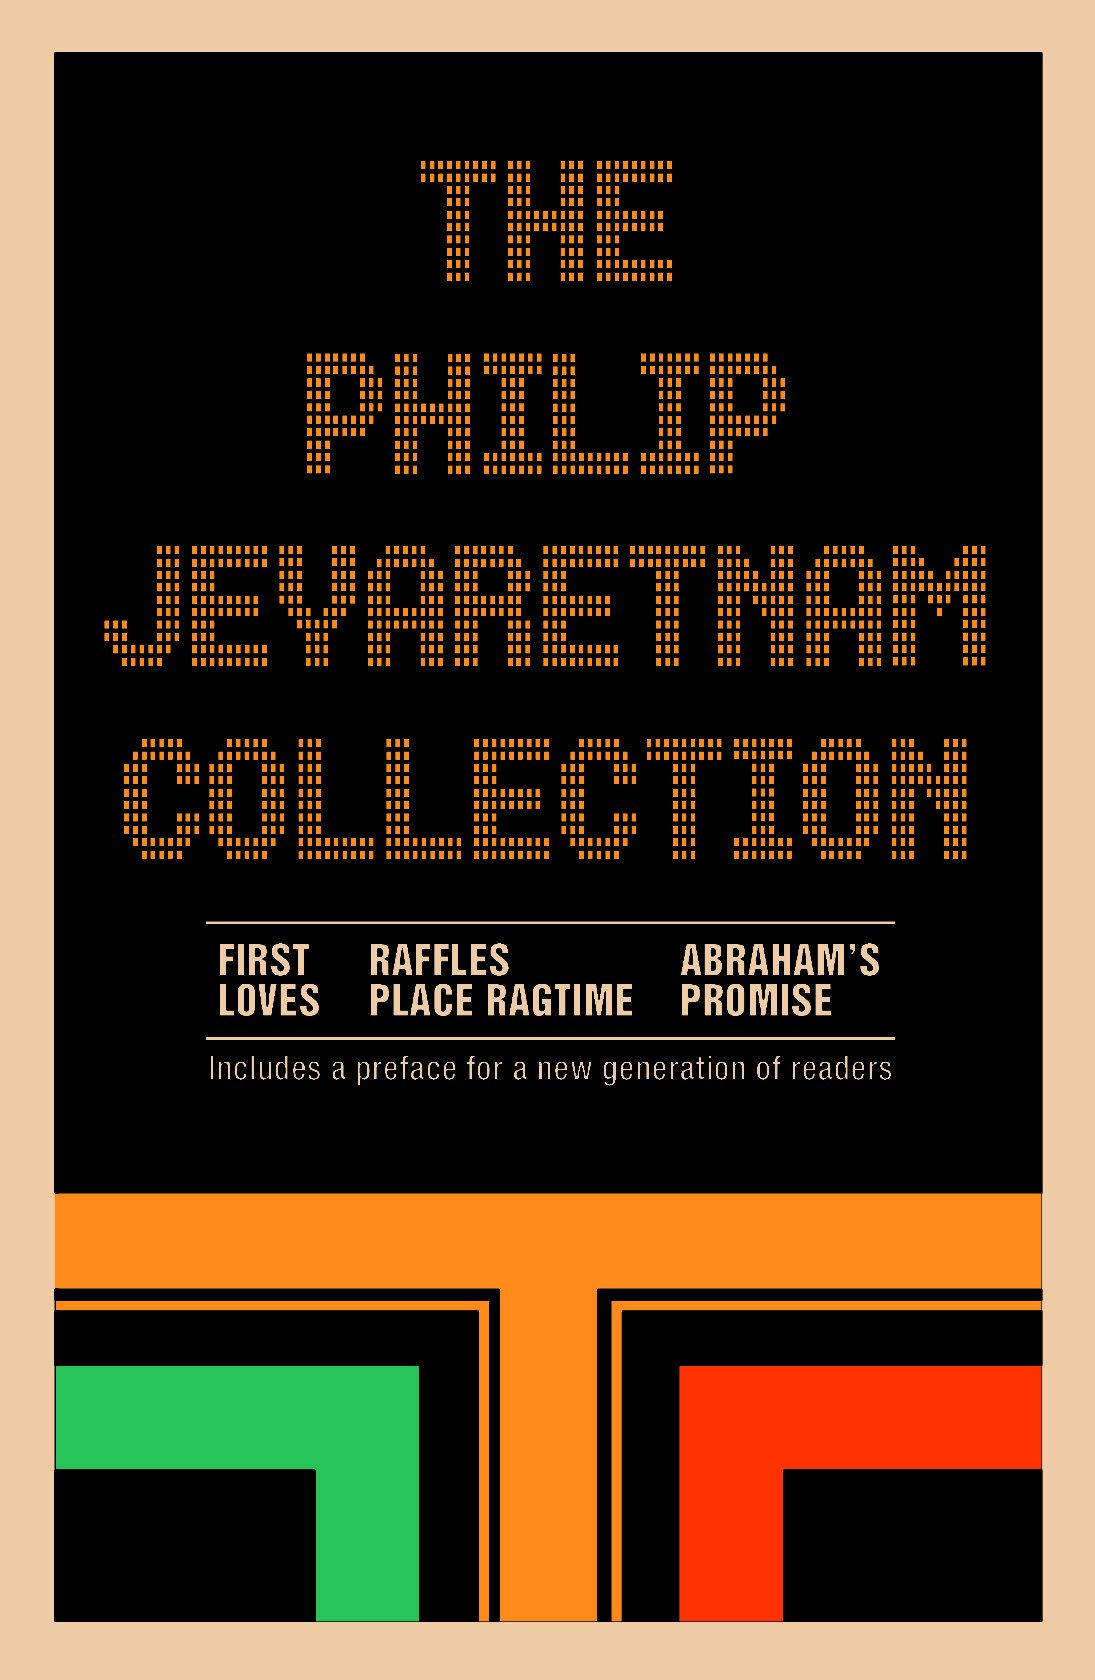 The Philip Jeyaretnam Collection - Localbooks.sg